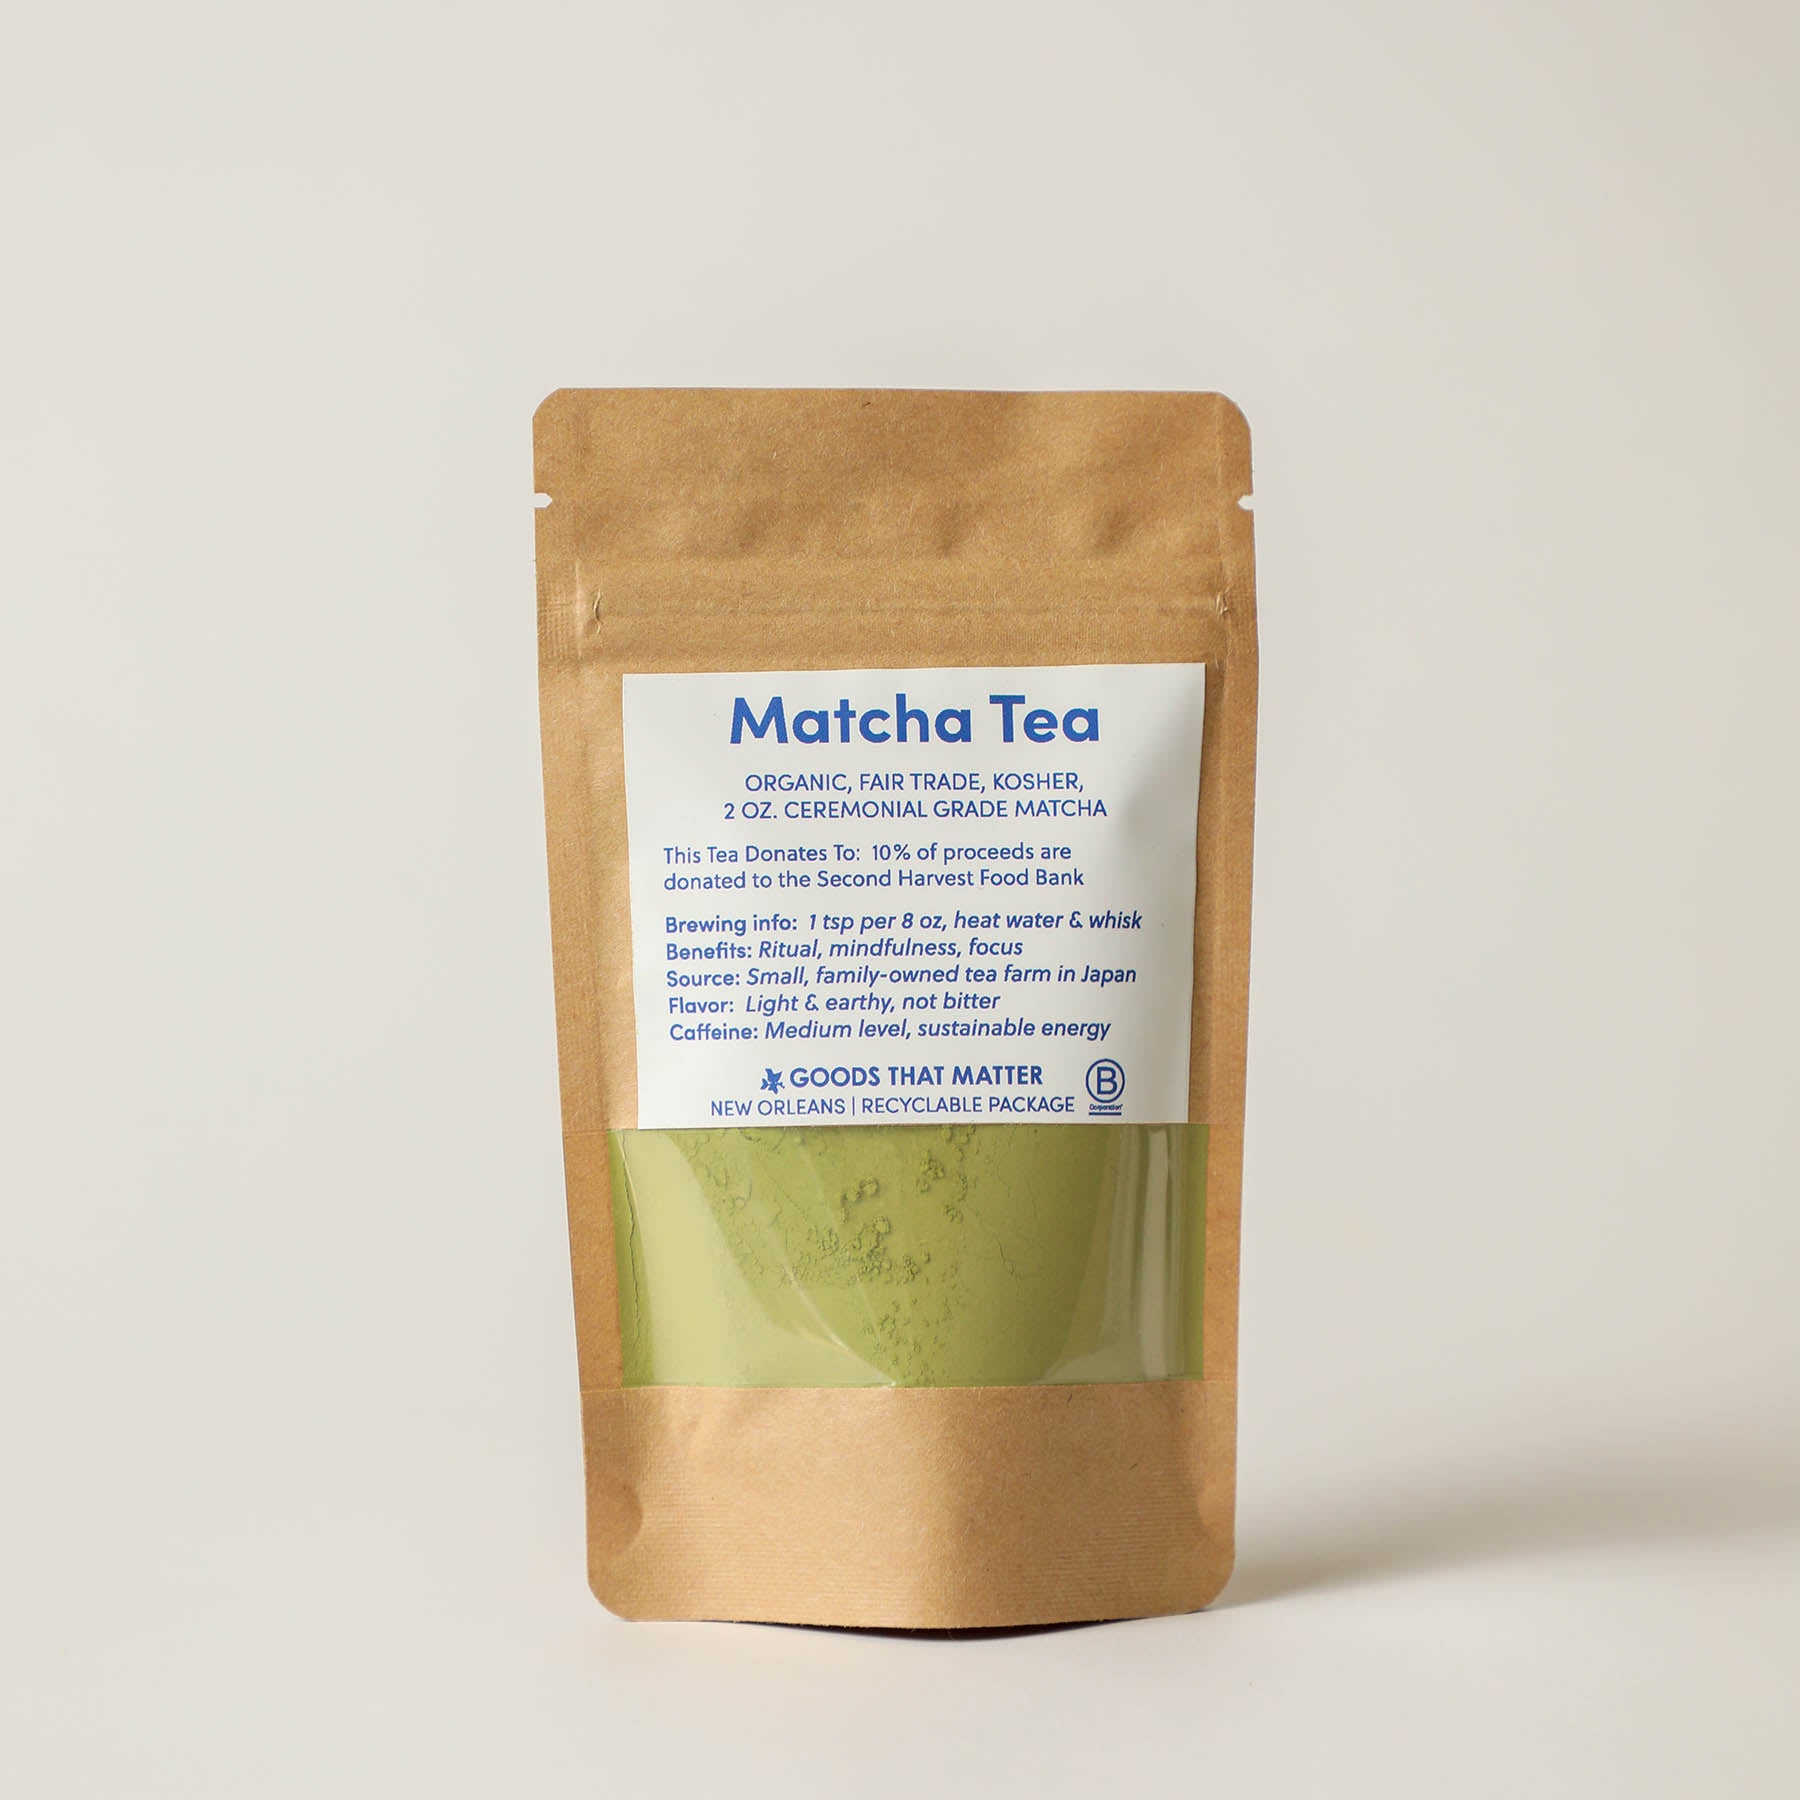 Matcha Benevolent Tea - Gives to the Second Harvest Food Bank